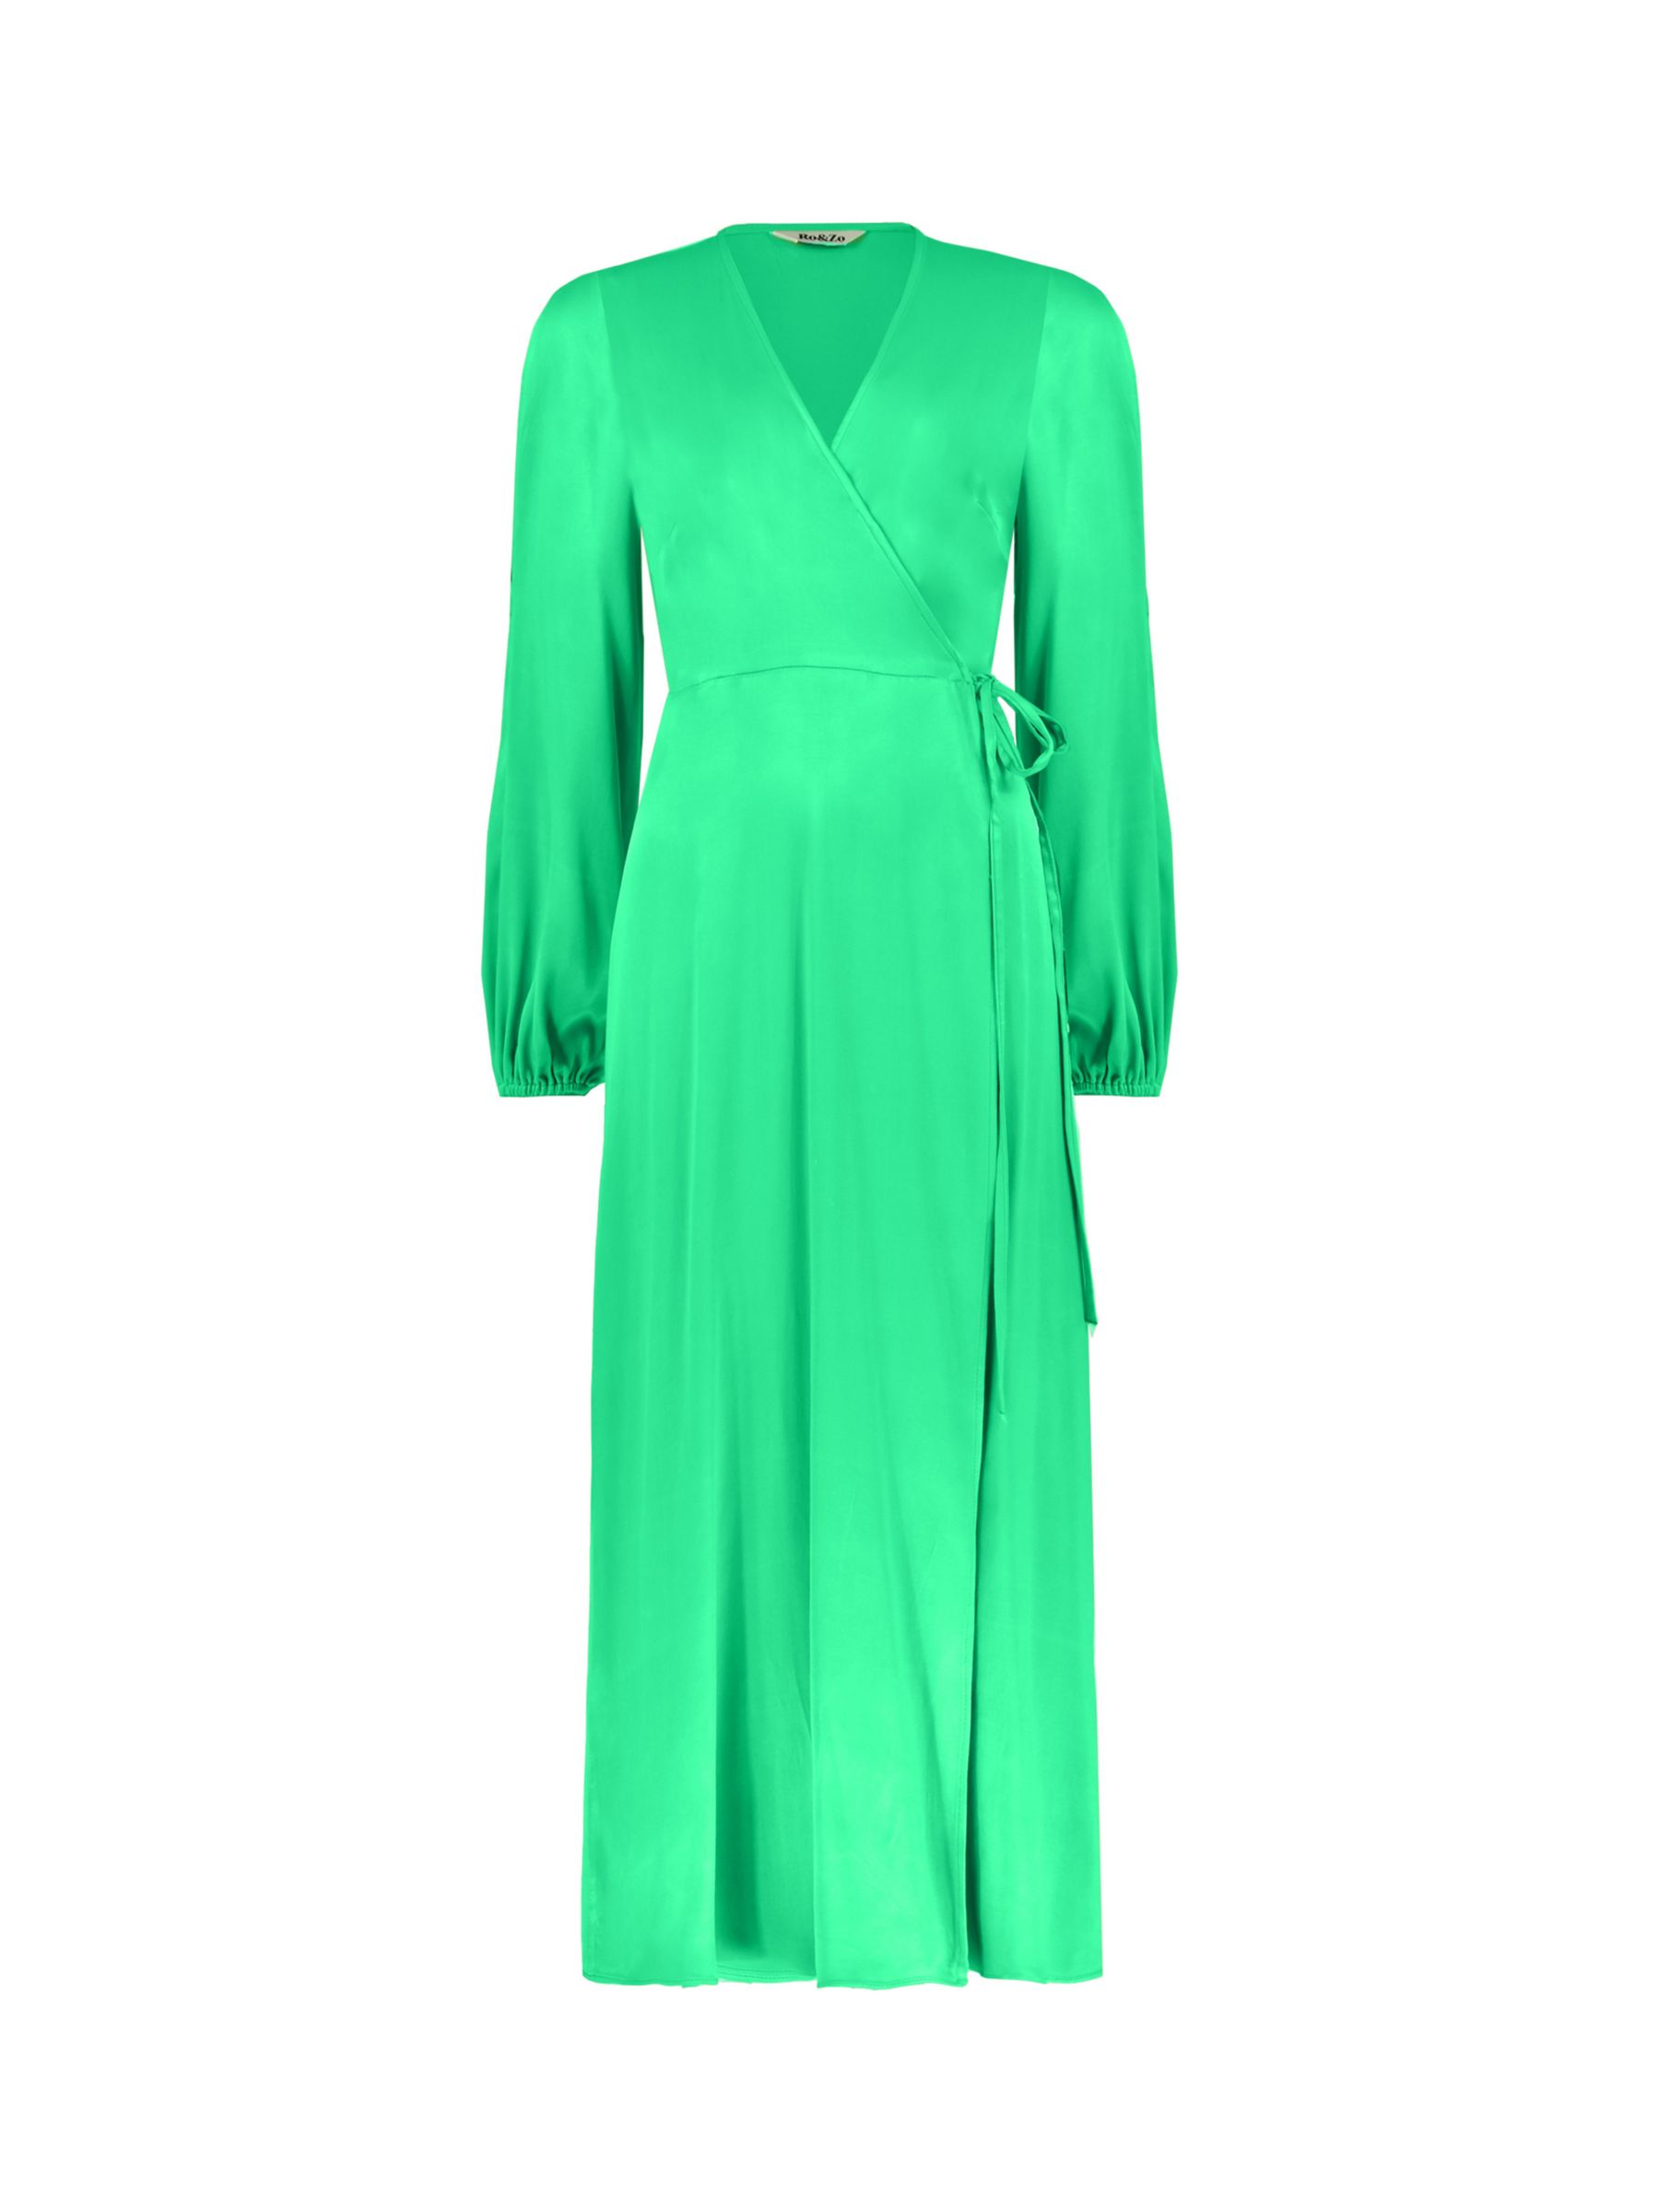 Ro&Zo Satin Cold Shoulder Wrap Dress, Green at John Lewis & Partners